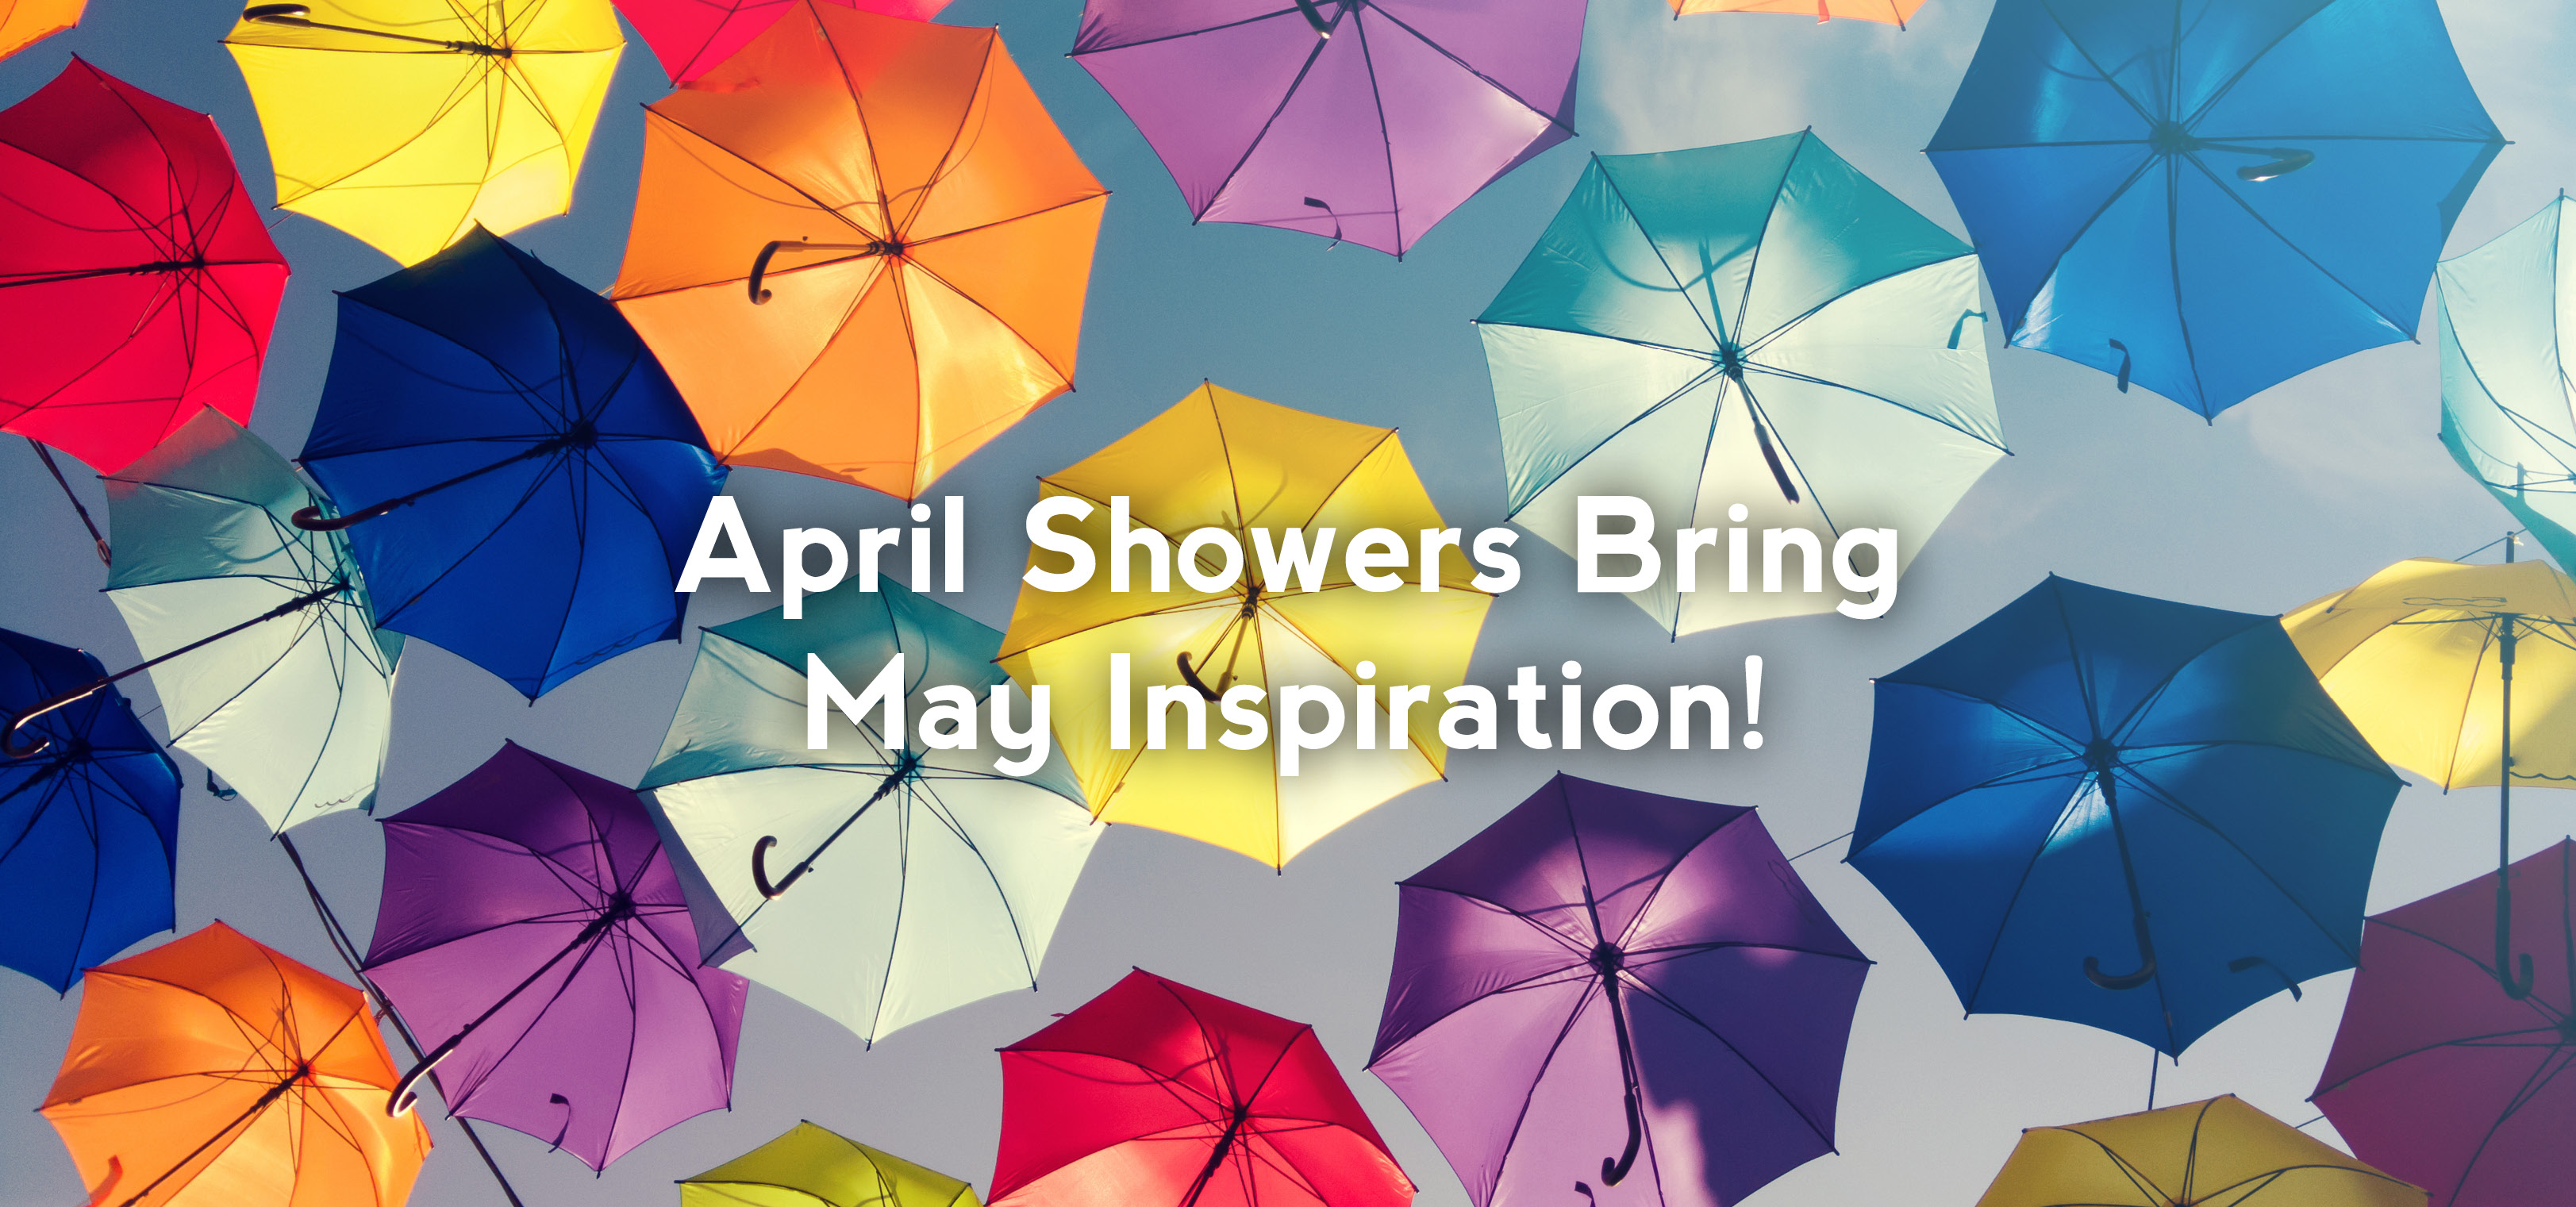 April Showers Bring May Inspiration